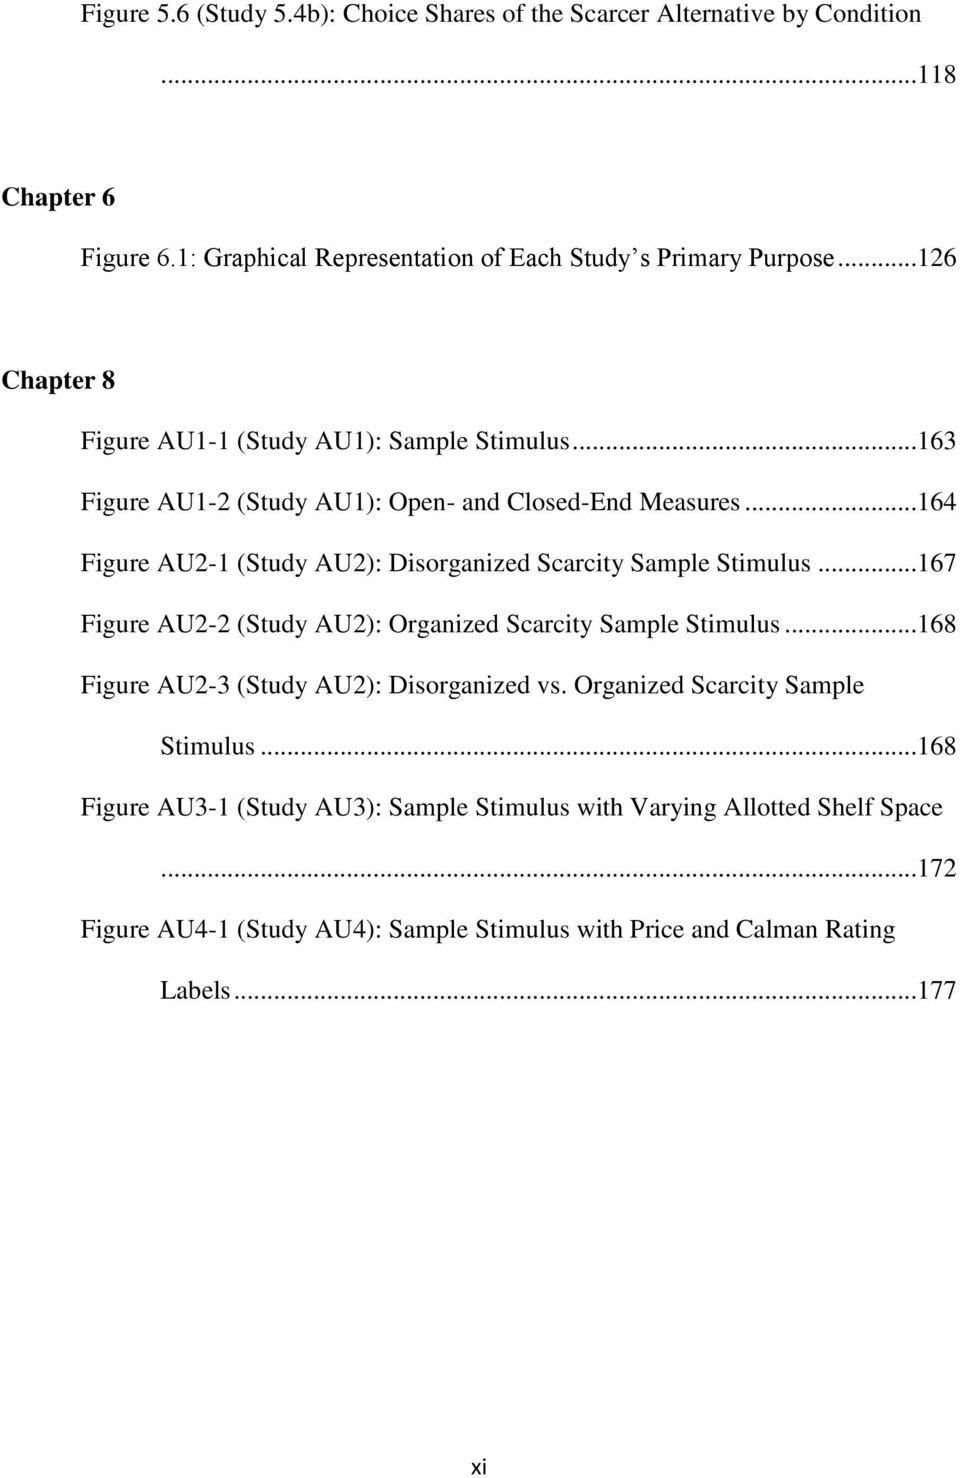 ..164 Figure AU2-1 (Study AU2): Disorganized Scarcity Sample Stimulus...167 Figure AU2-2 (Study AU2): Organized Scarcity Sample Stimulus.